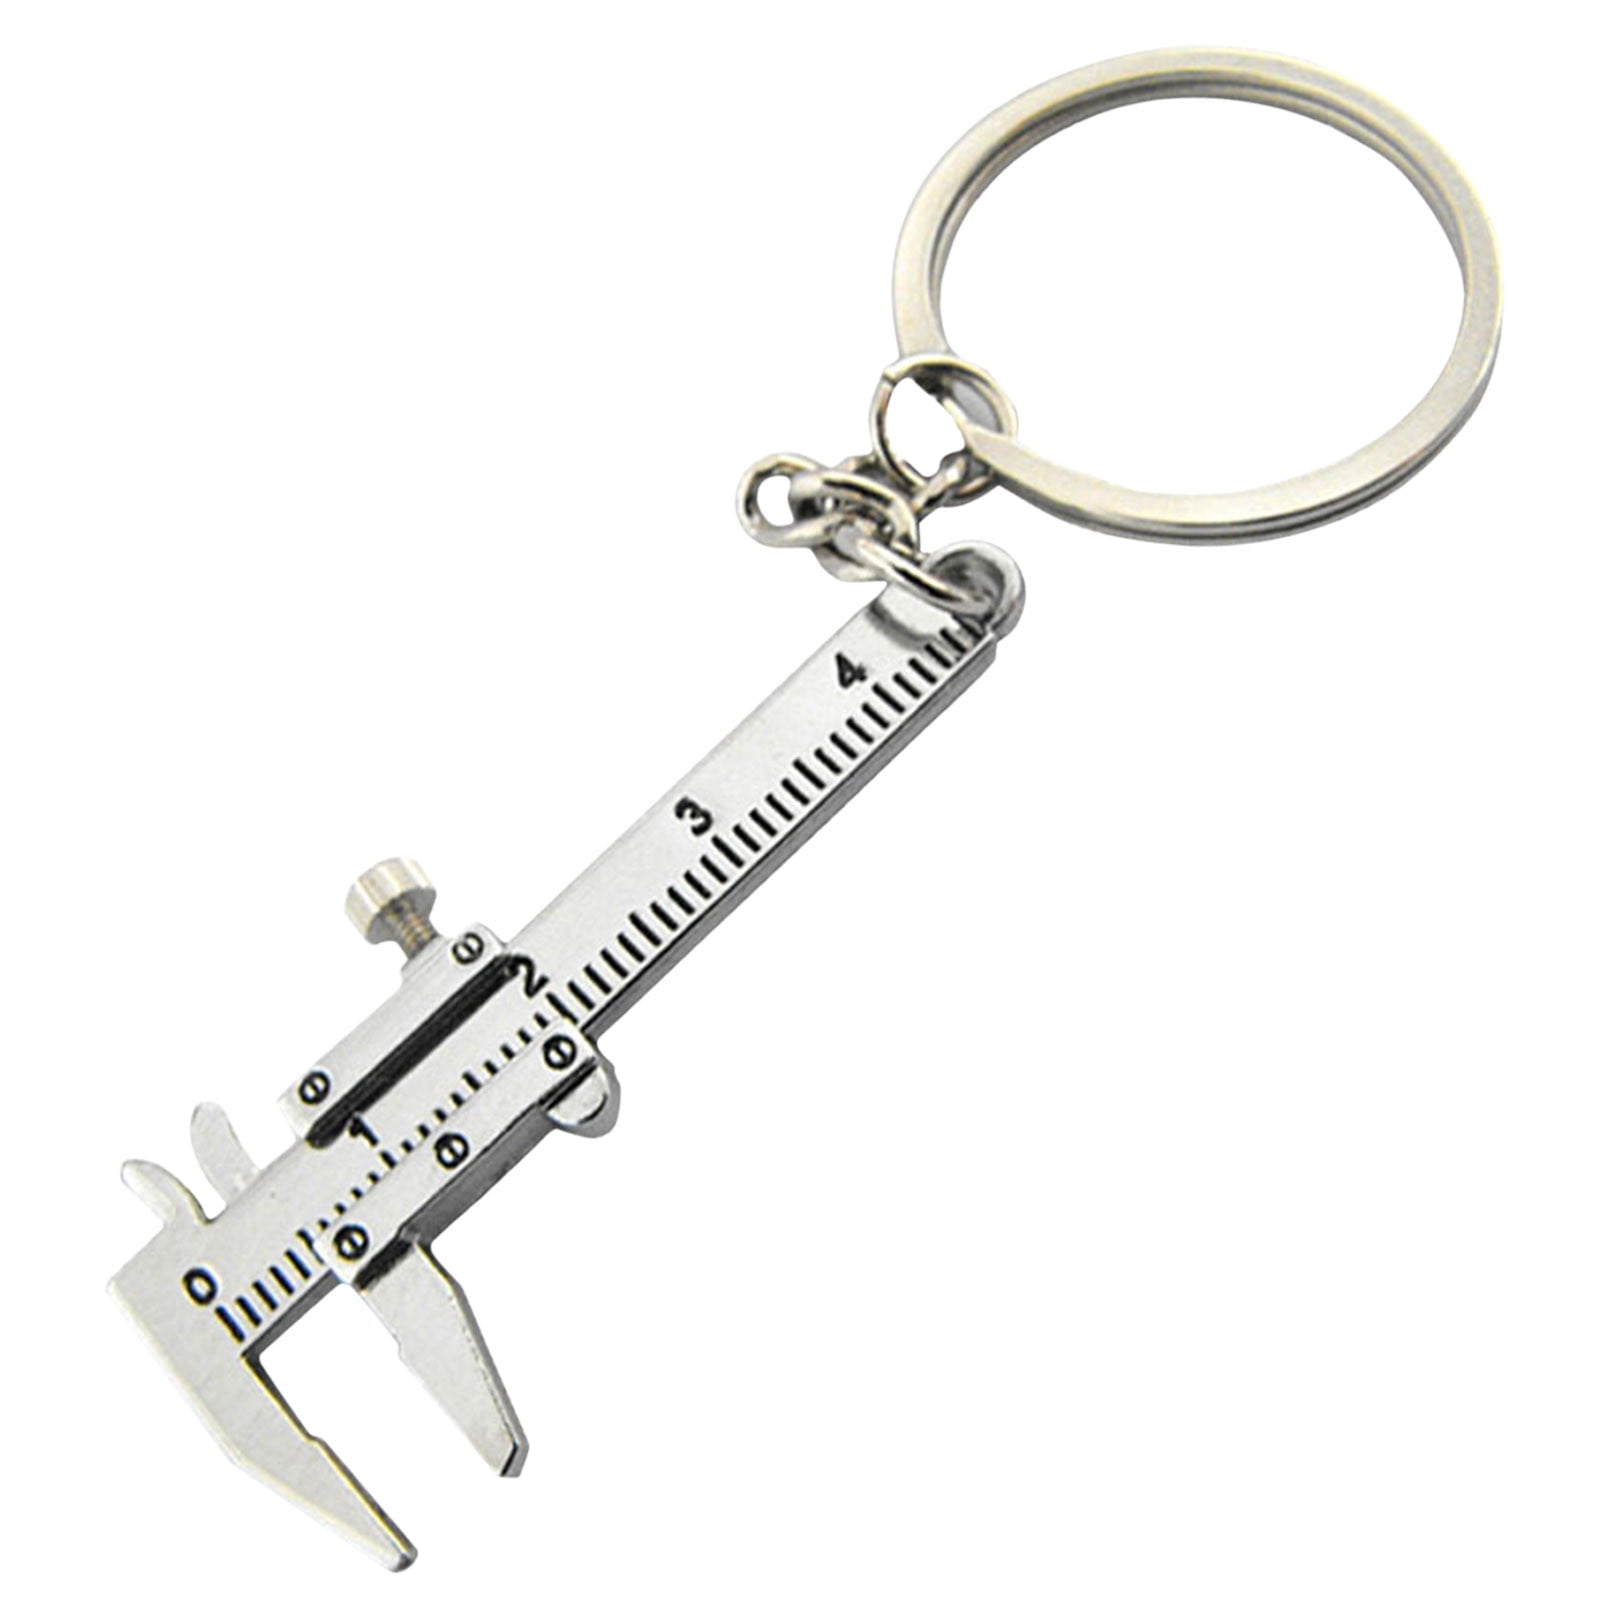 2 x New Mini Tool Vernier Caliper Movable Ruler Metal Keychain Key Ring 